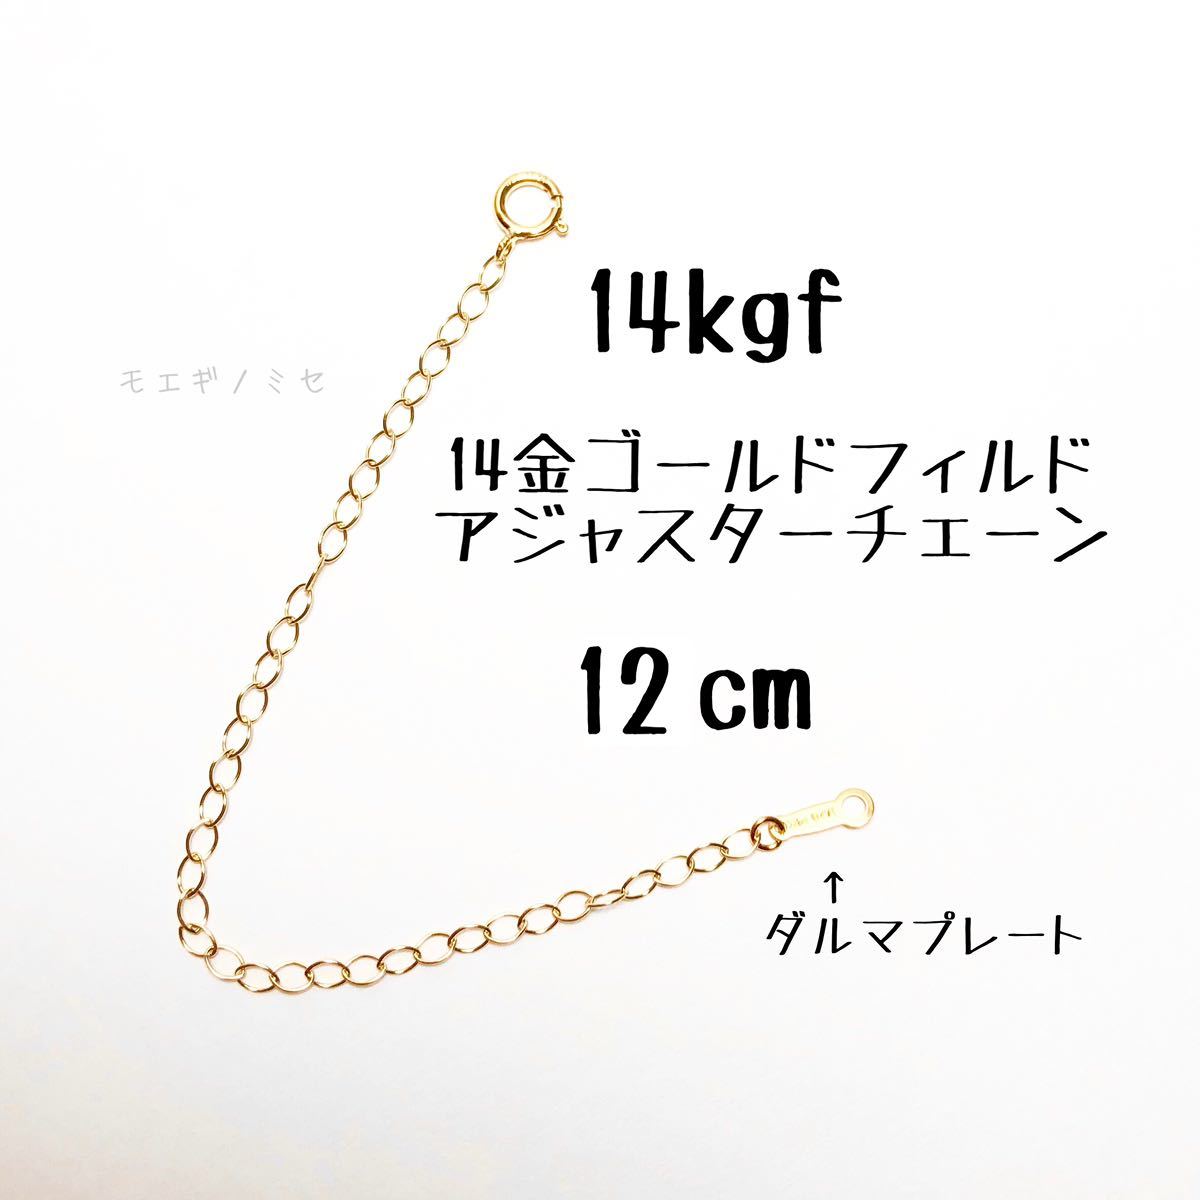 14kgf 12cm adjuster chain 14 gold Gold Phil do necklace length adjustment parts 